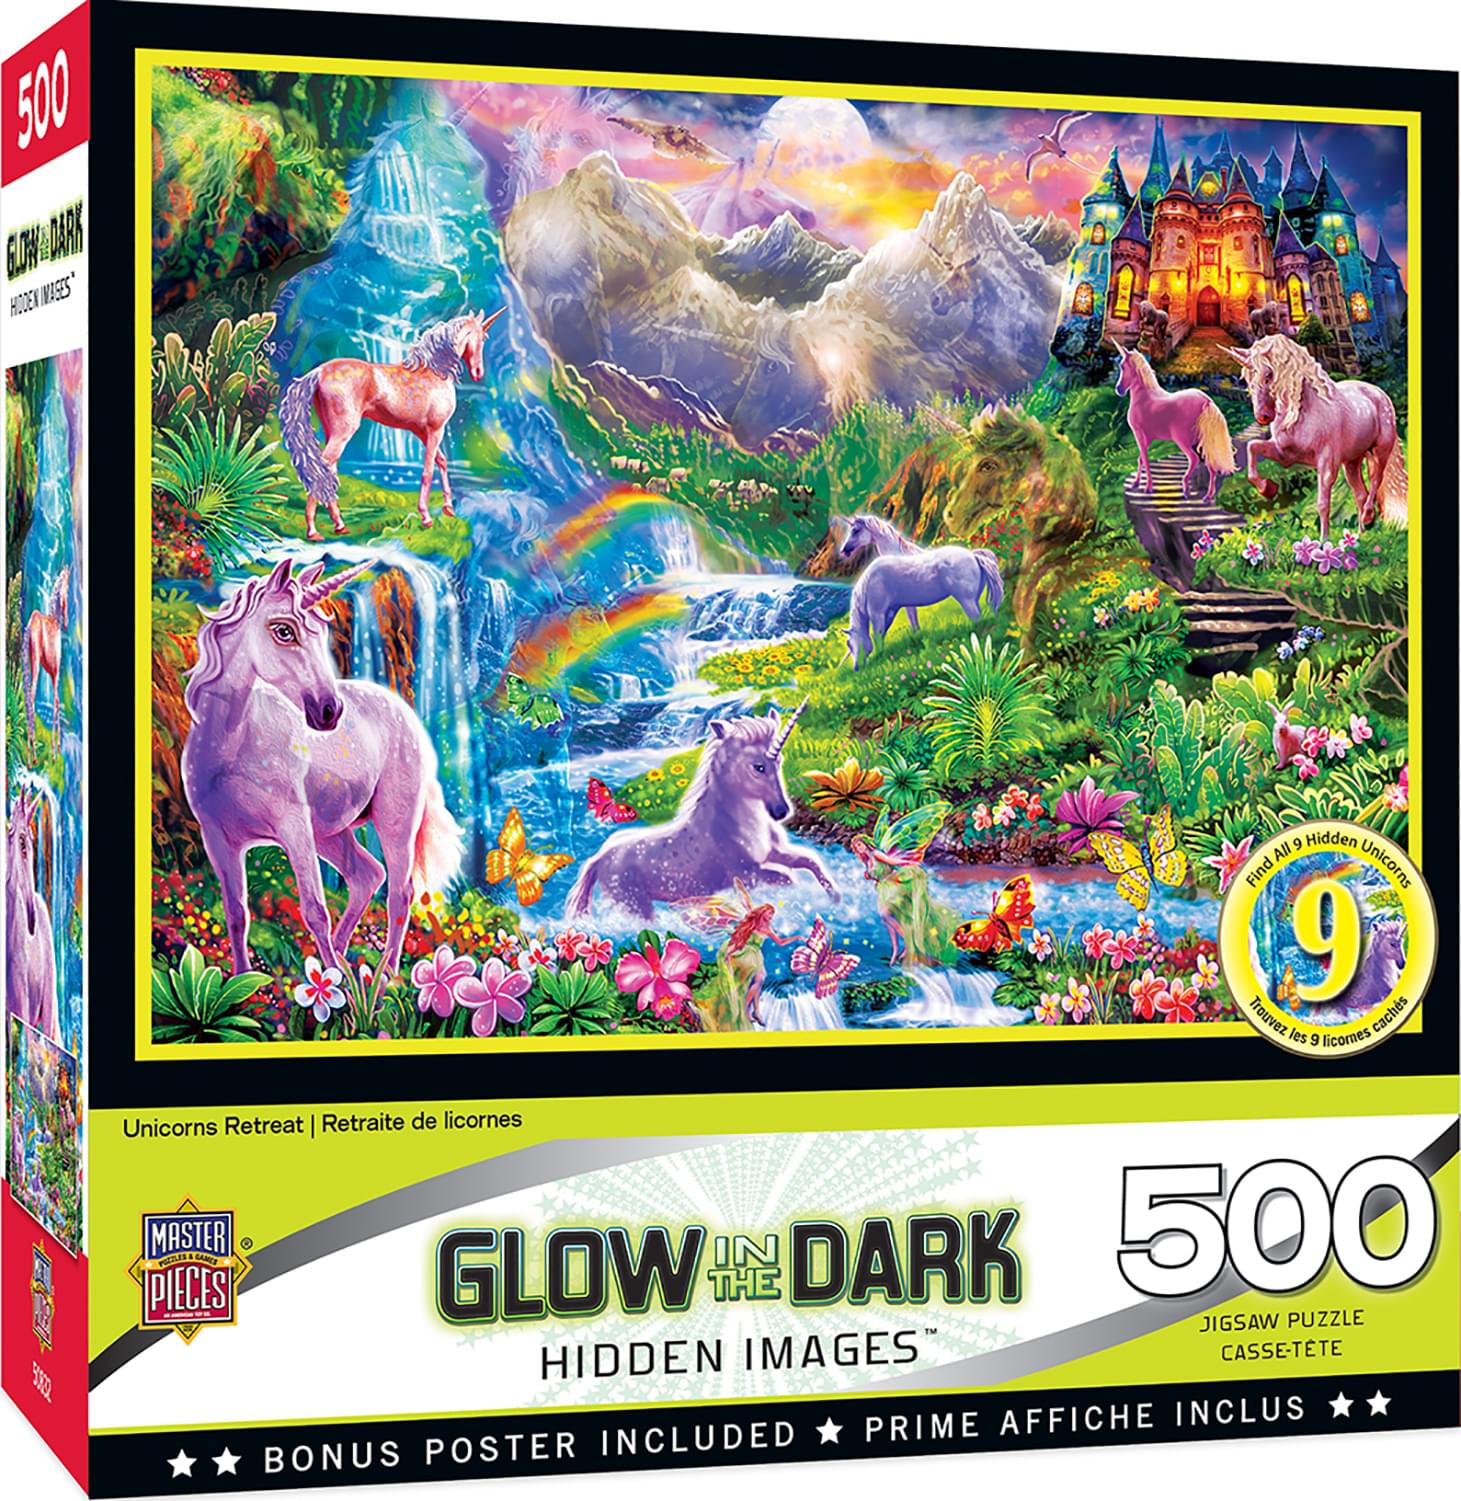 Unicorns Retreat 500 Piece Hidden Images Glow In The Dark Jigsaw Puzzle